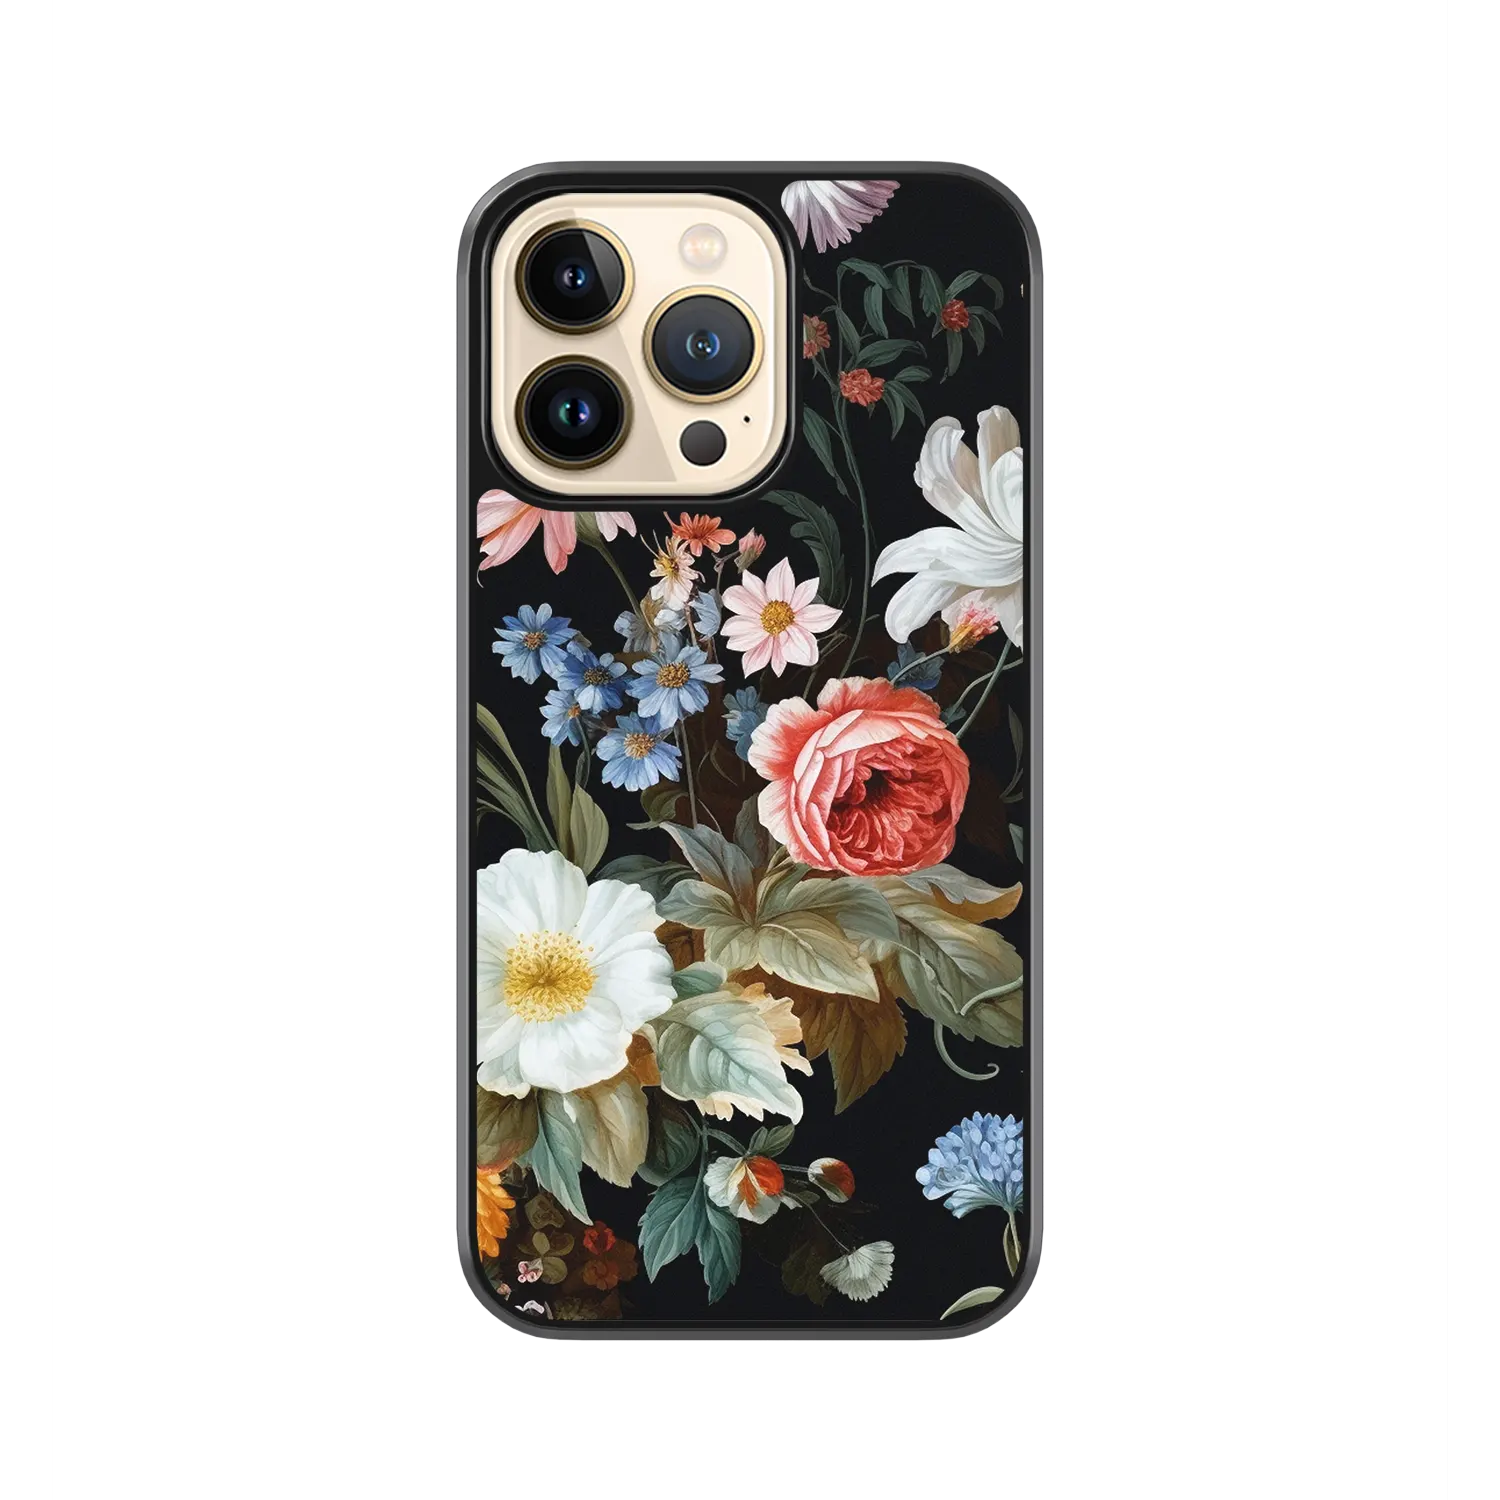 Lush Gardens iPhone 11 Pro Max Case